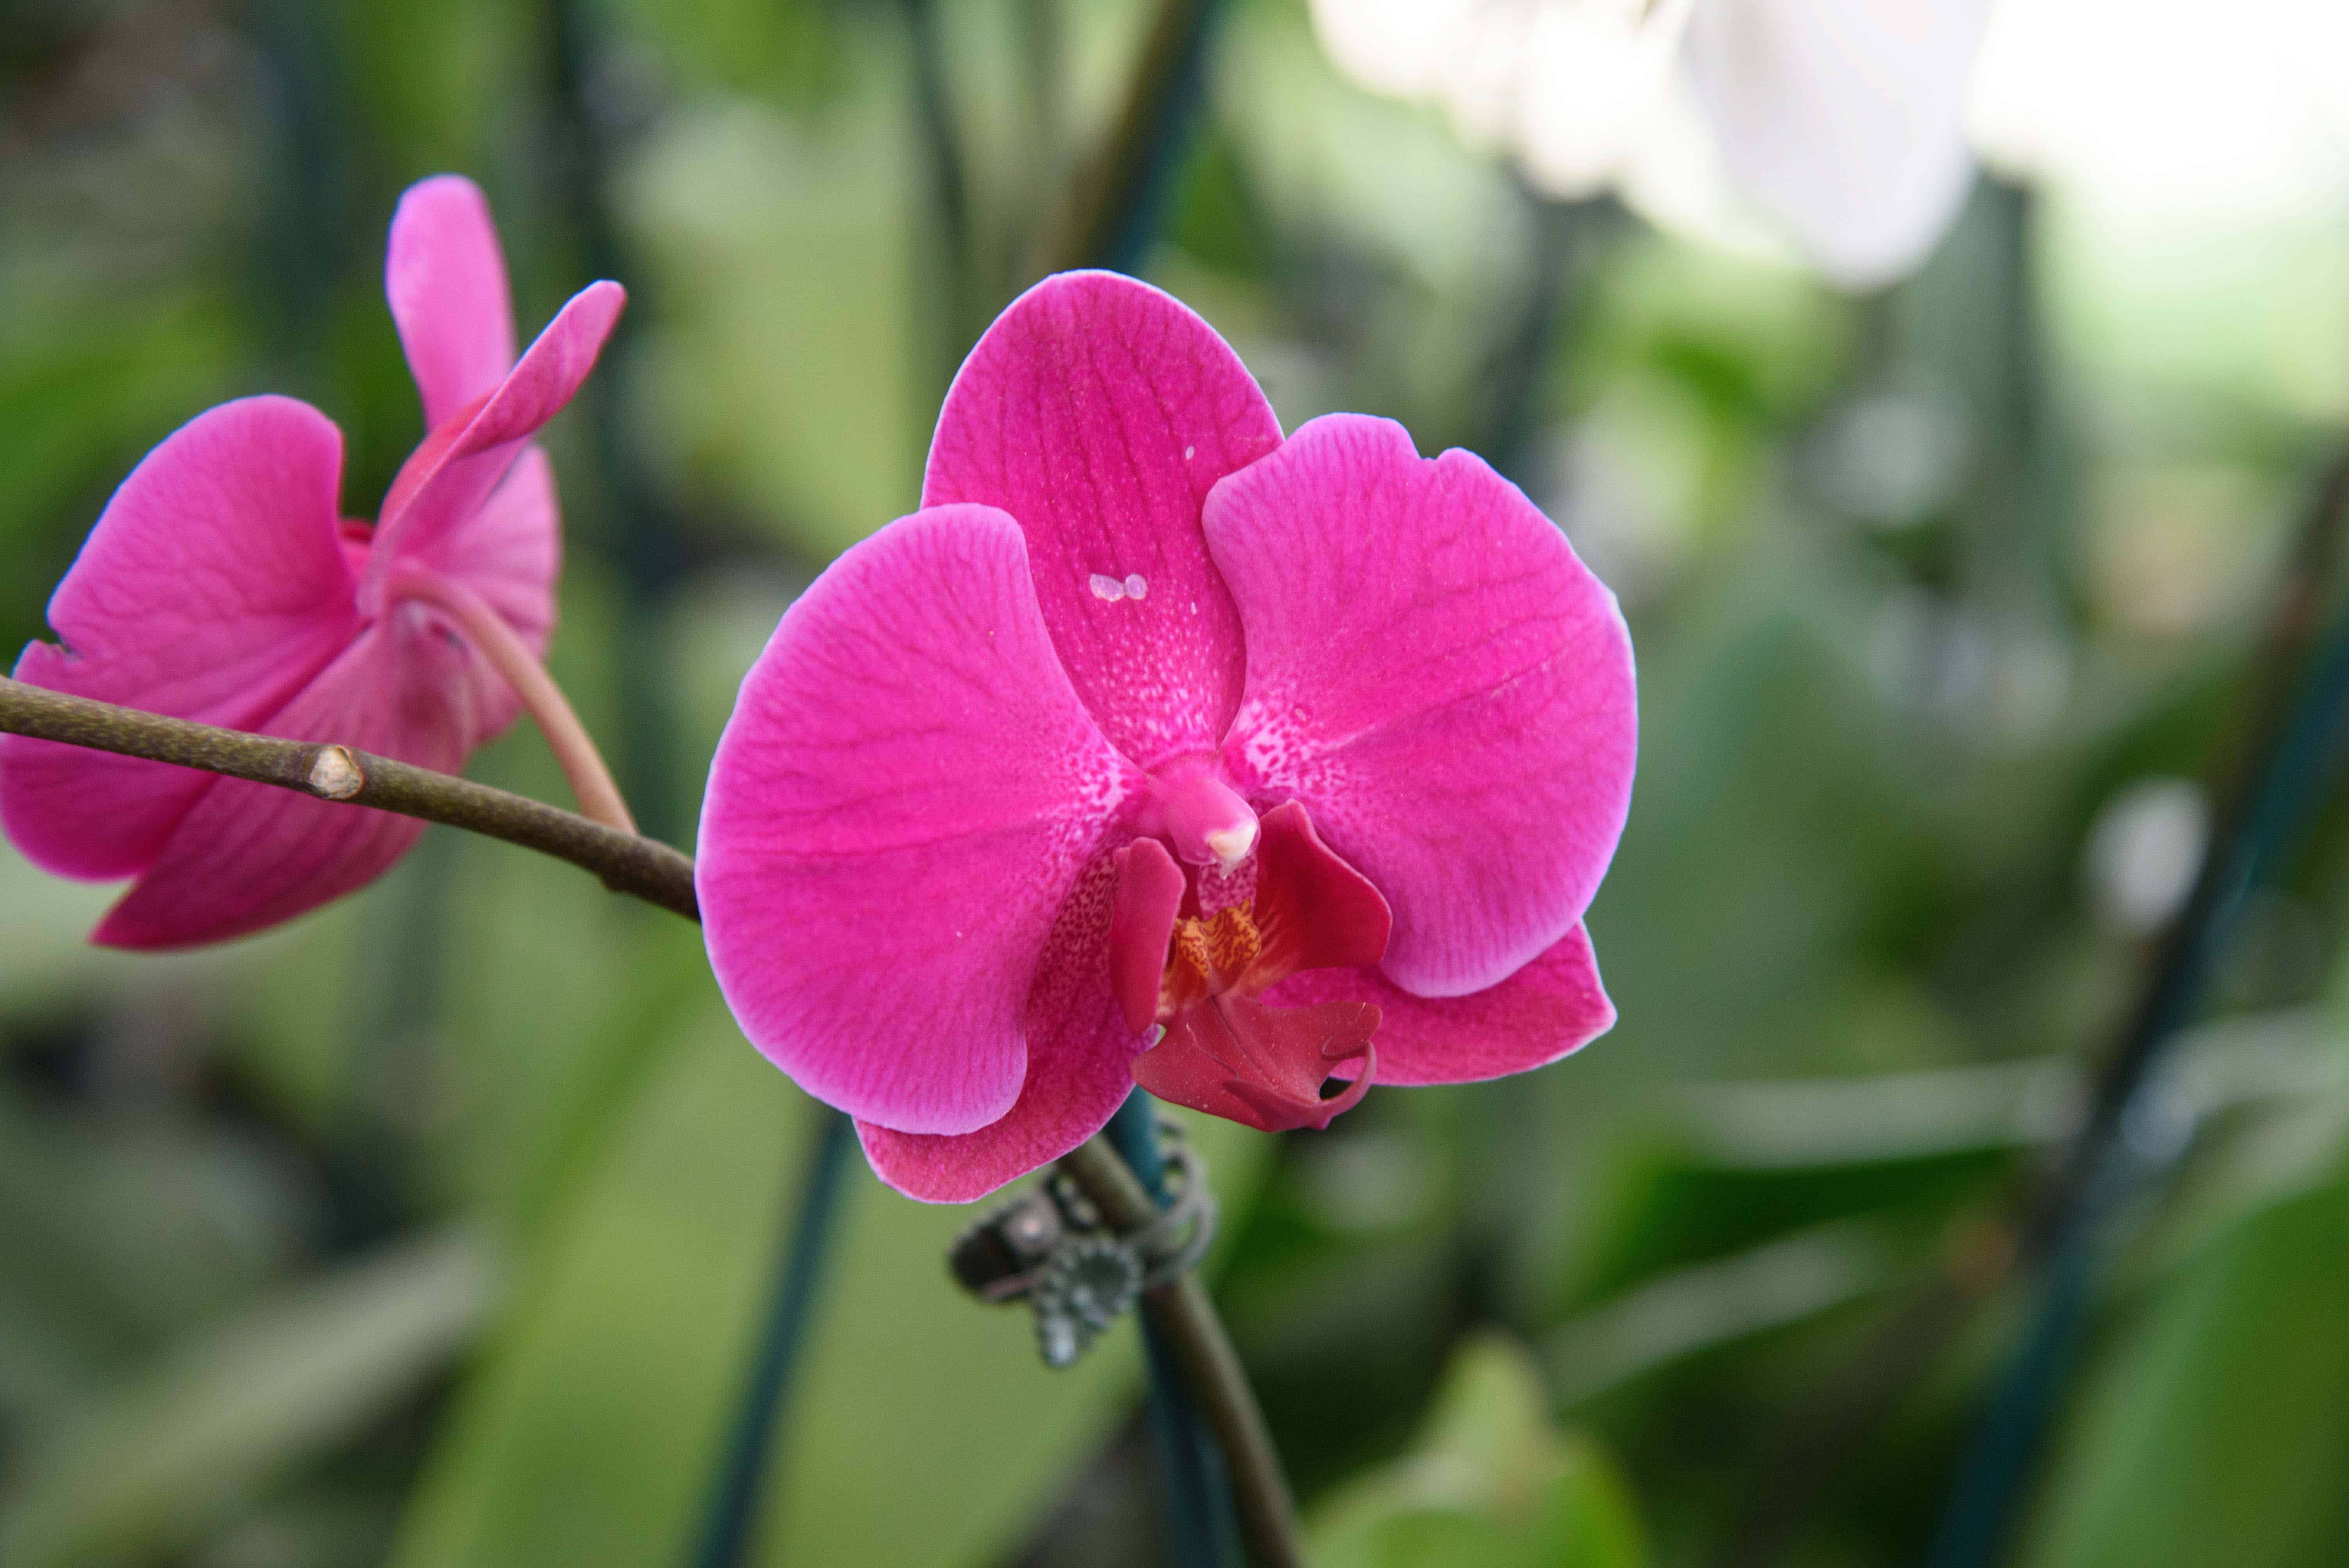 Jardín Botánico tiene exposición de orquídeas - Diario Libre